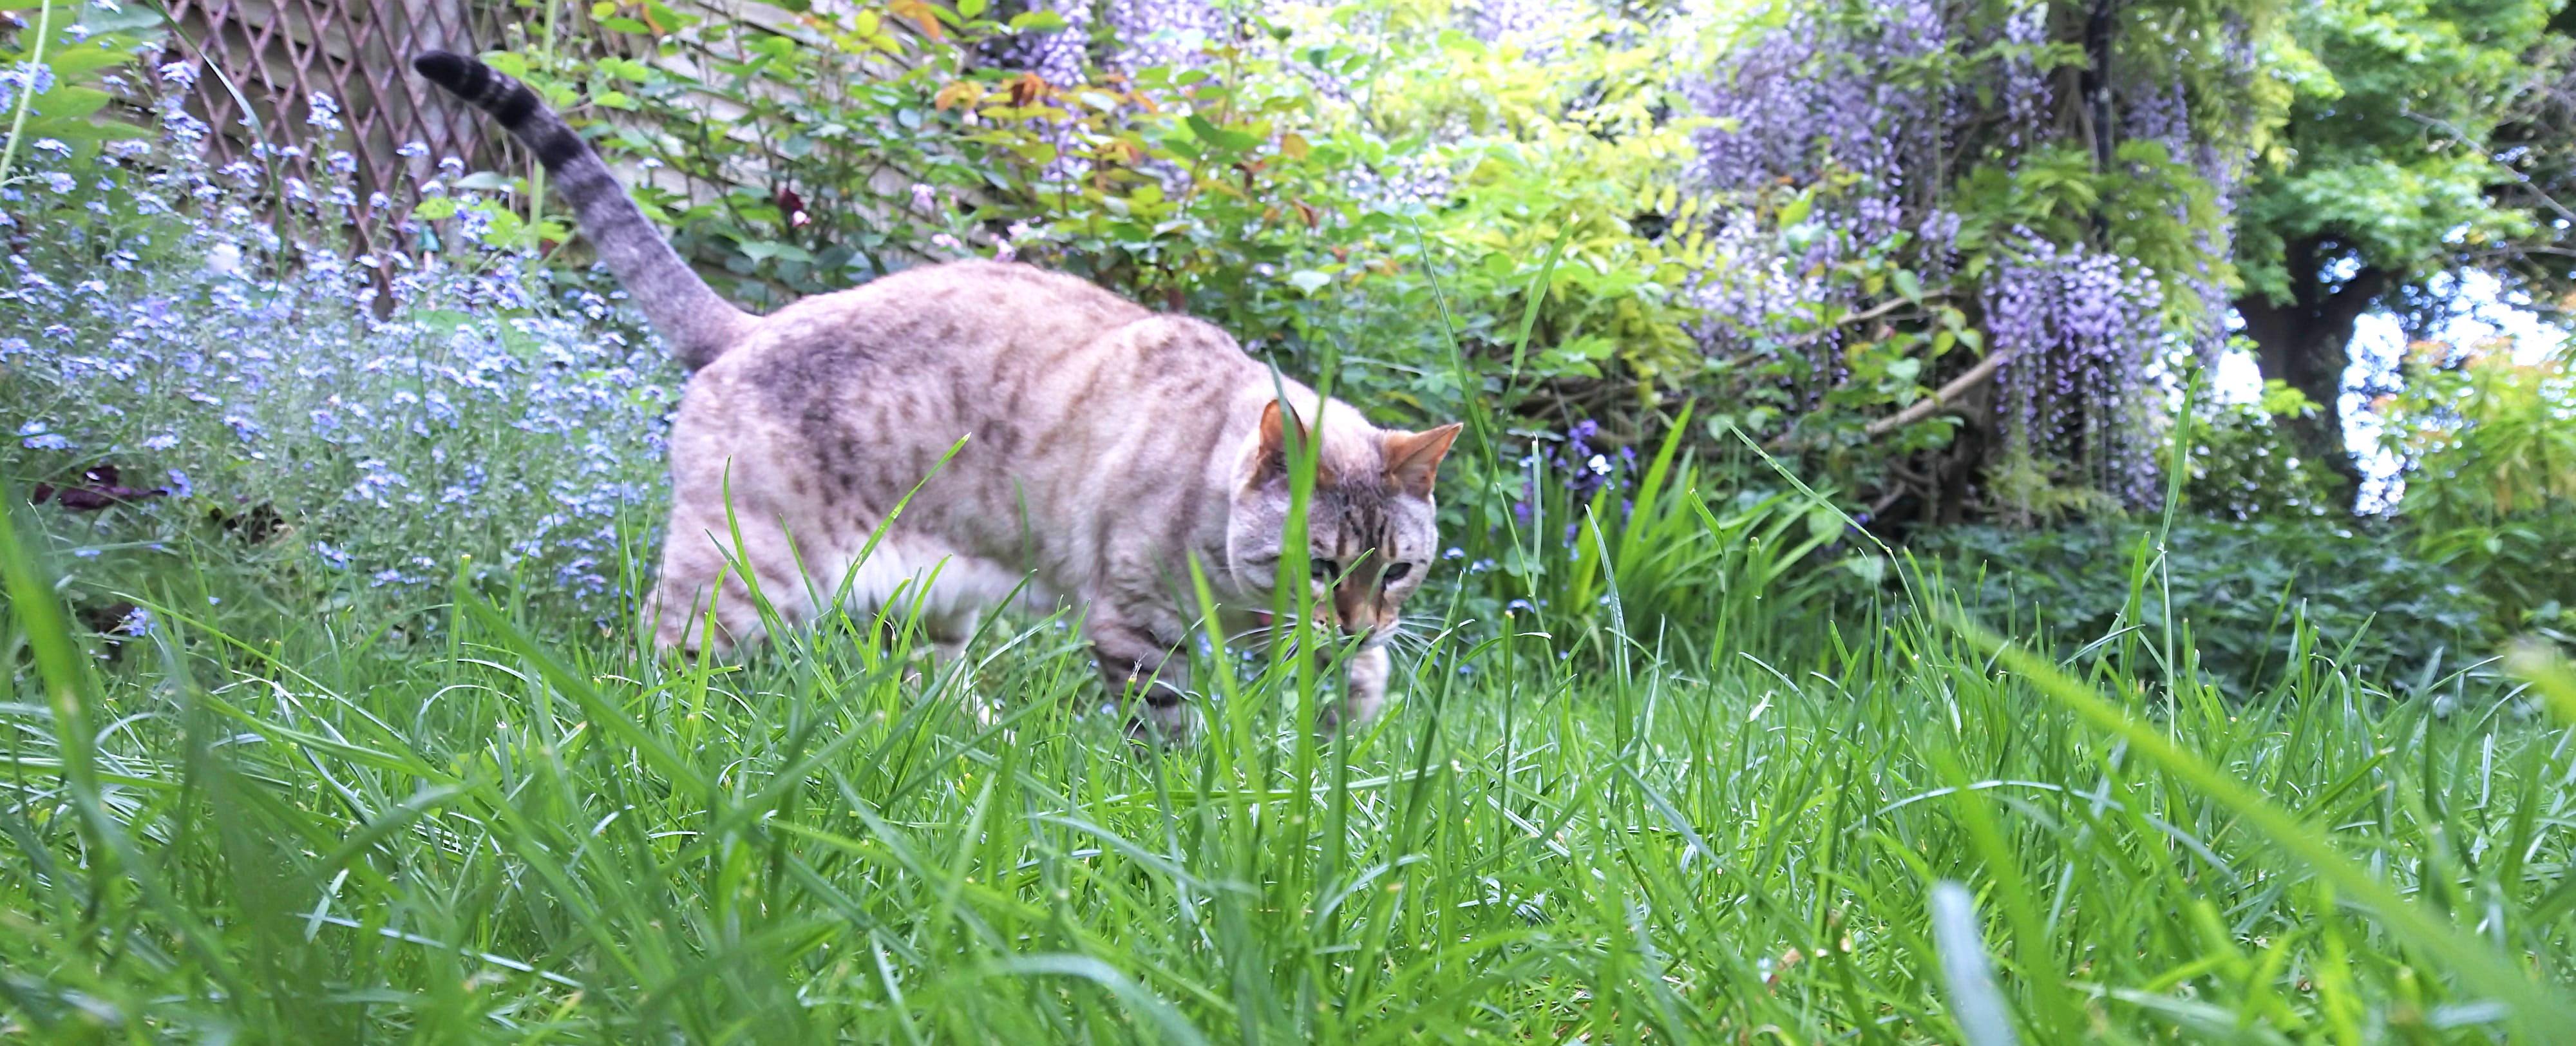 Asima in the garden